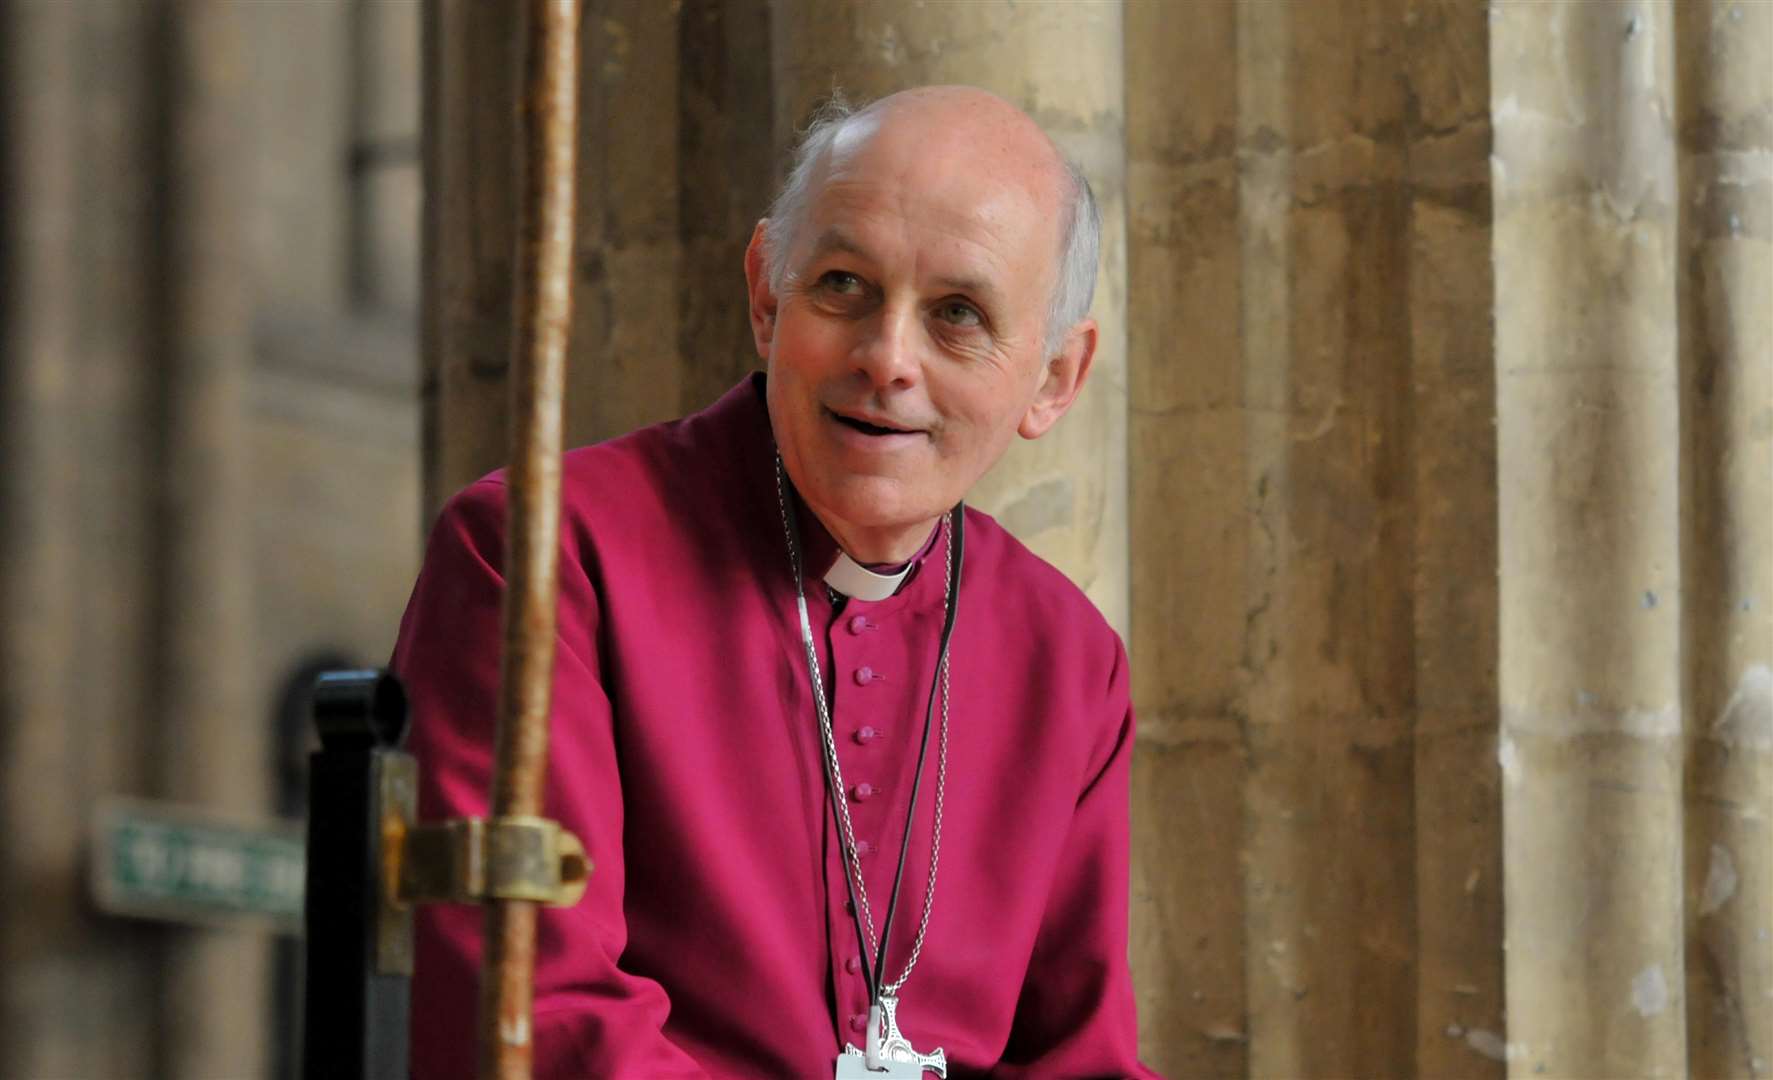 The Rt Rev Trevor Willmott, Bishop of Dover